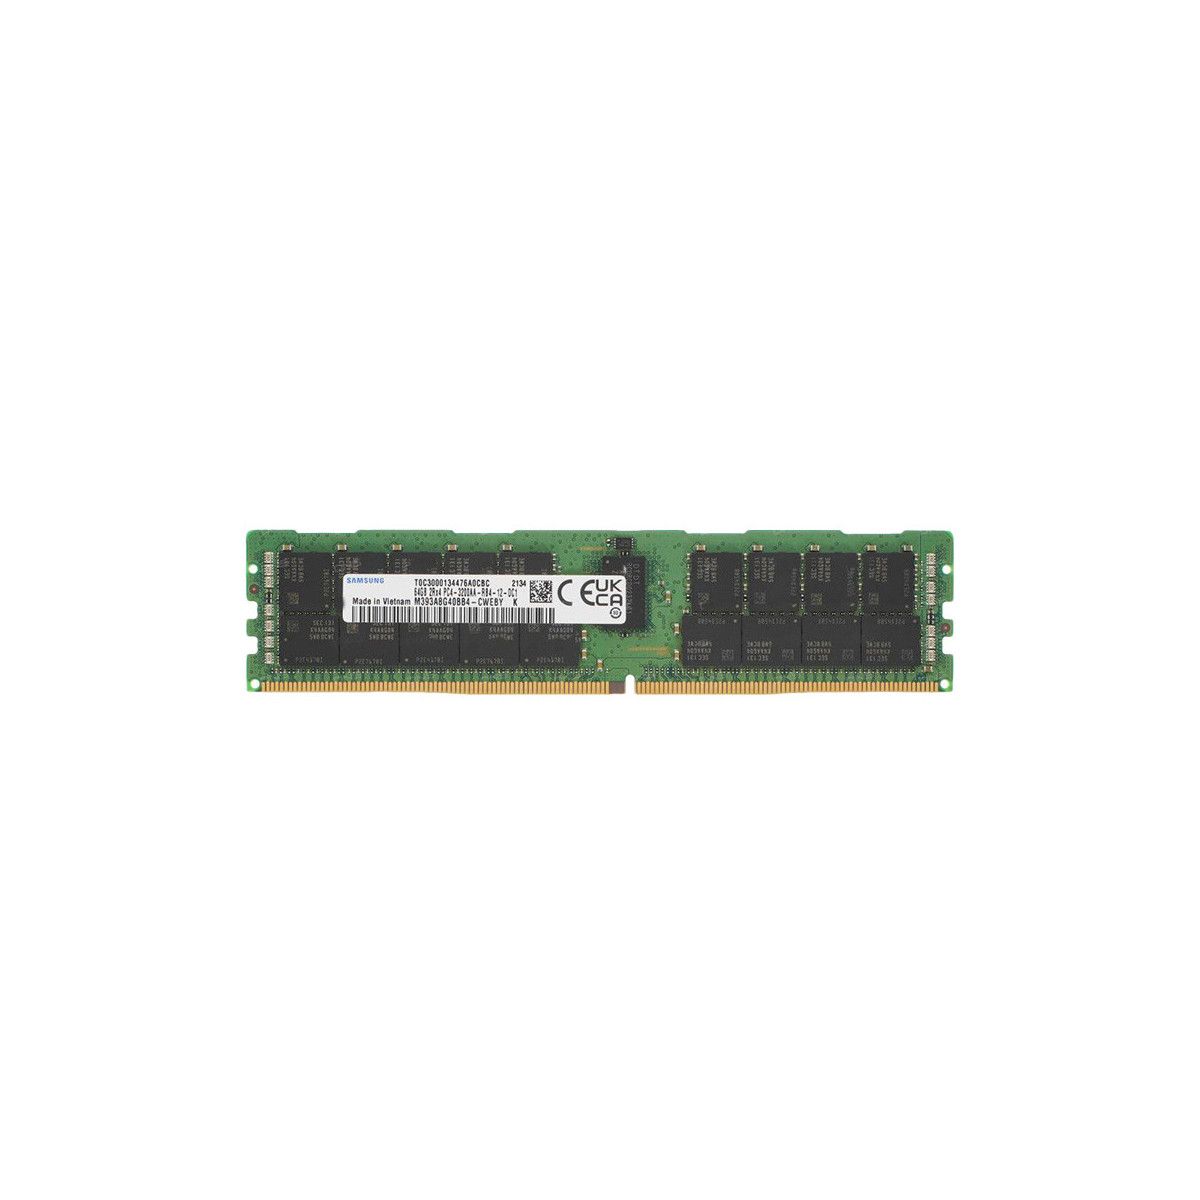 AA799110-MS - Memstar 1x 64GB DDR4-3200 RDIMM PC4-25600R - OEM compatible con Mem-Star Memoria 1 - Memstar 